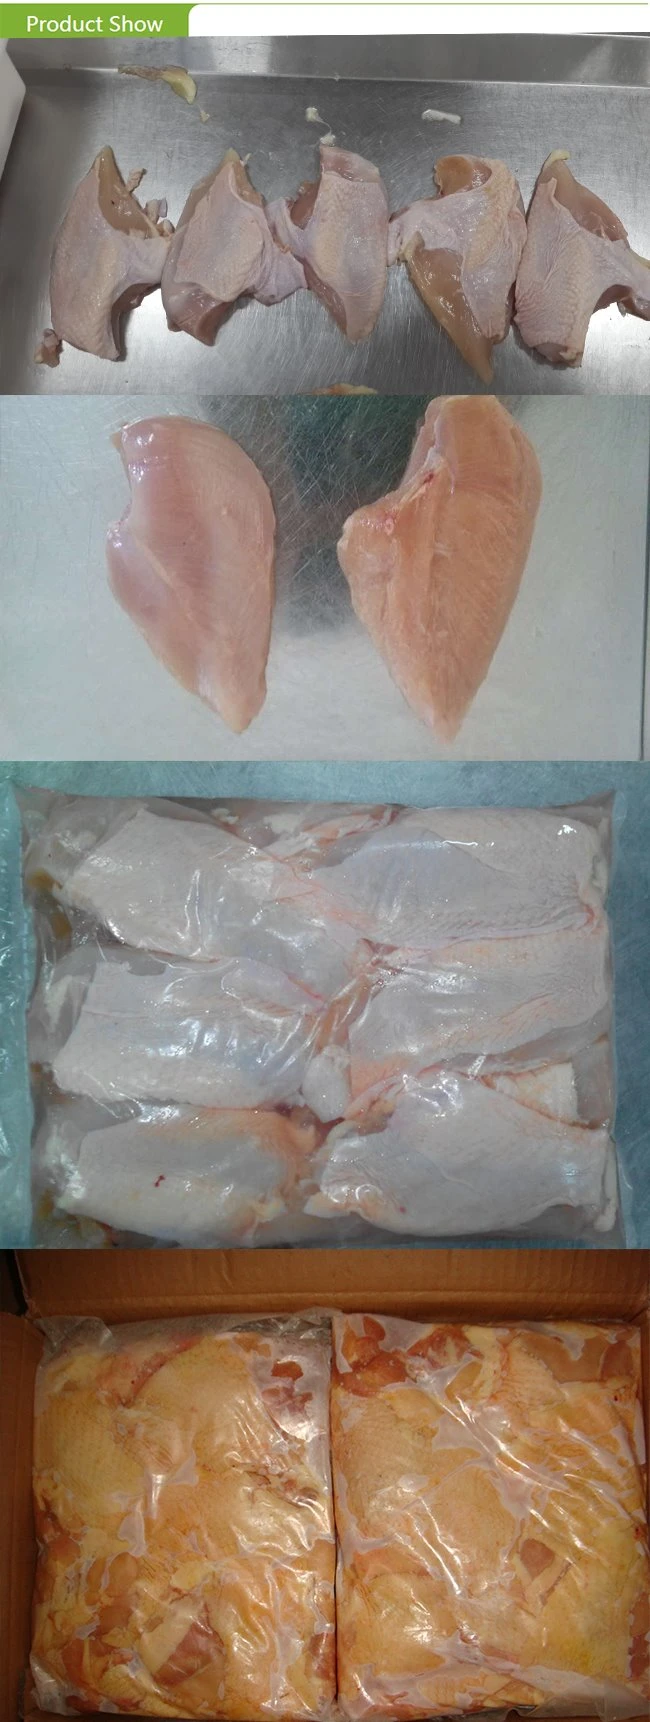 Frozen Chicken Breast with Halal Certification